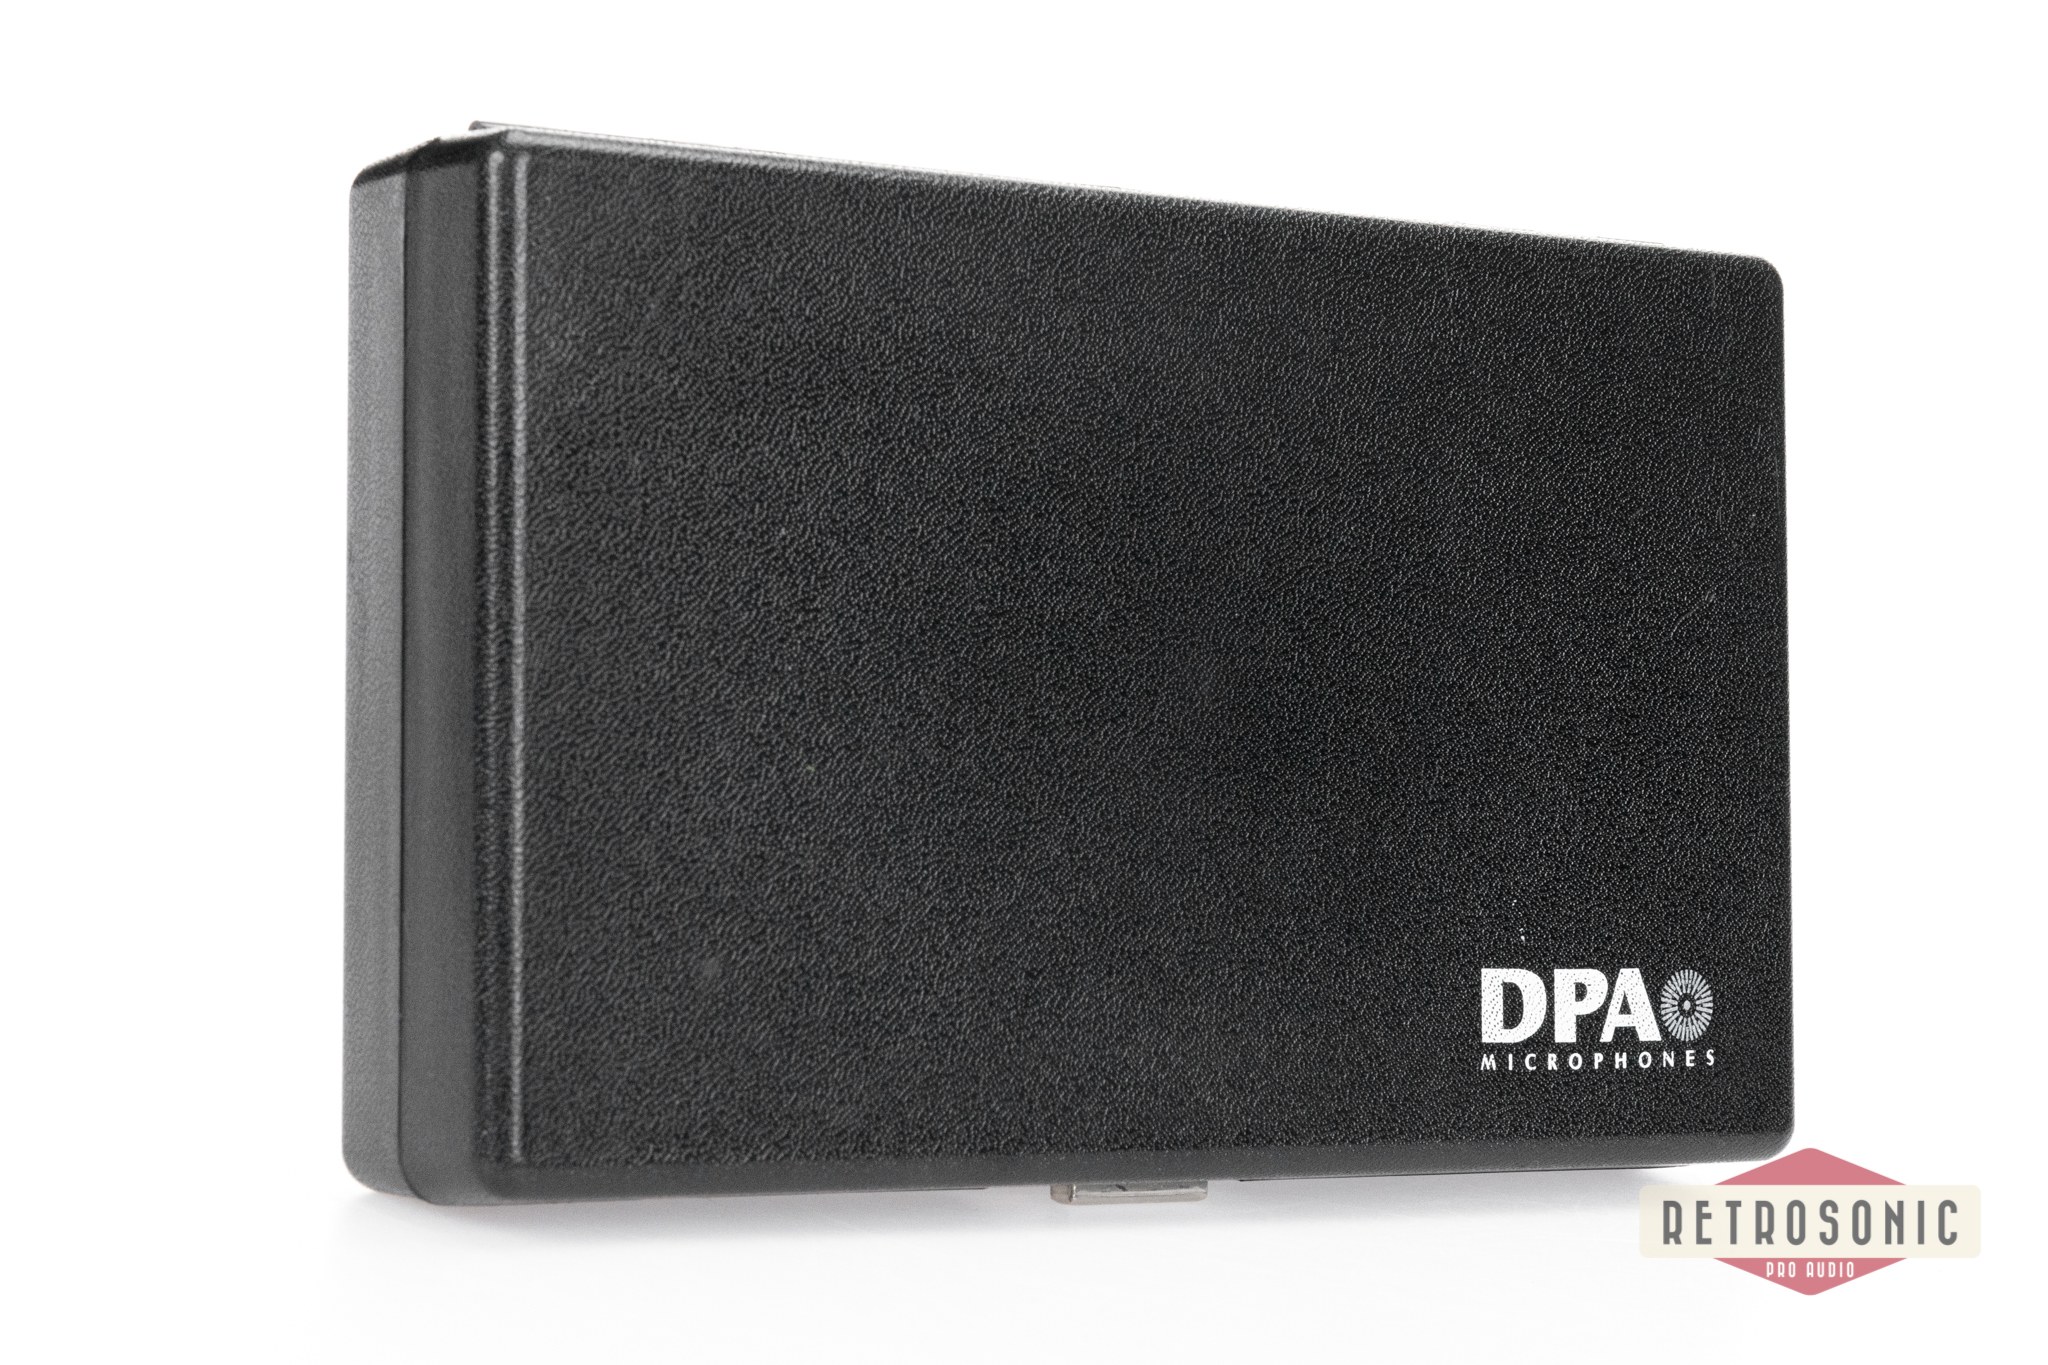 DPA 4091 Omnidirectional Condenser Mic #1